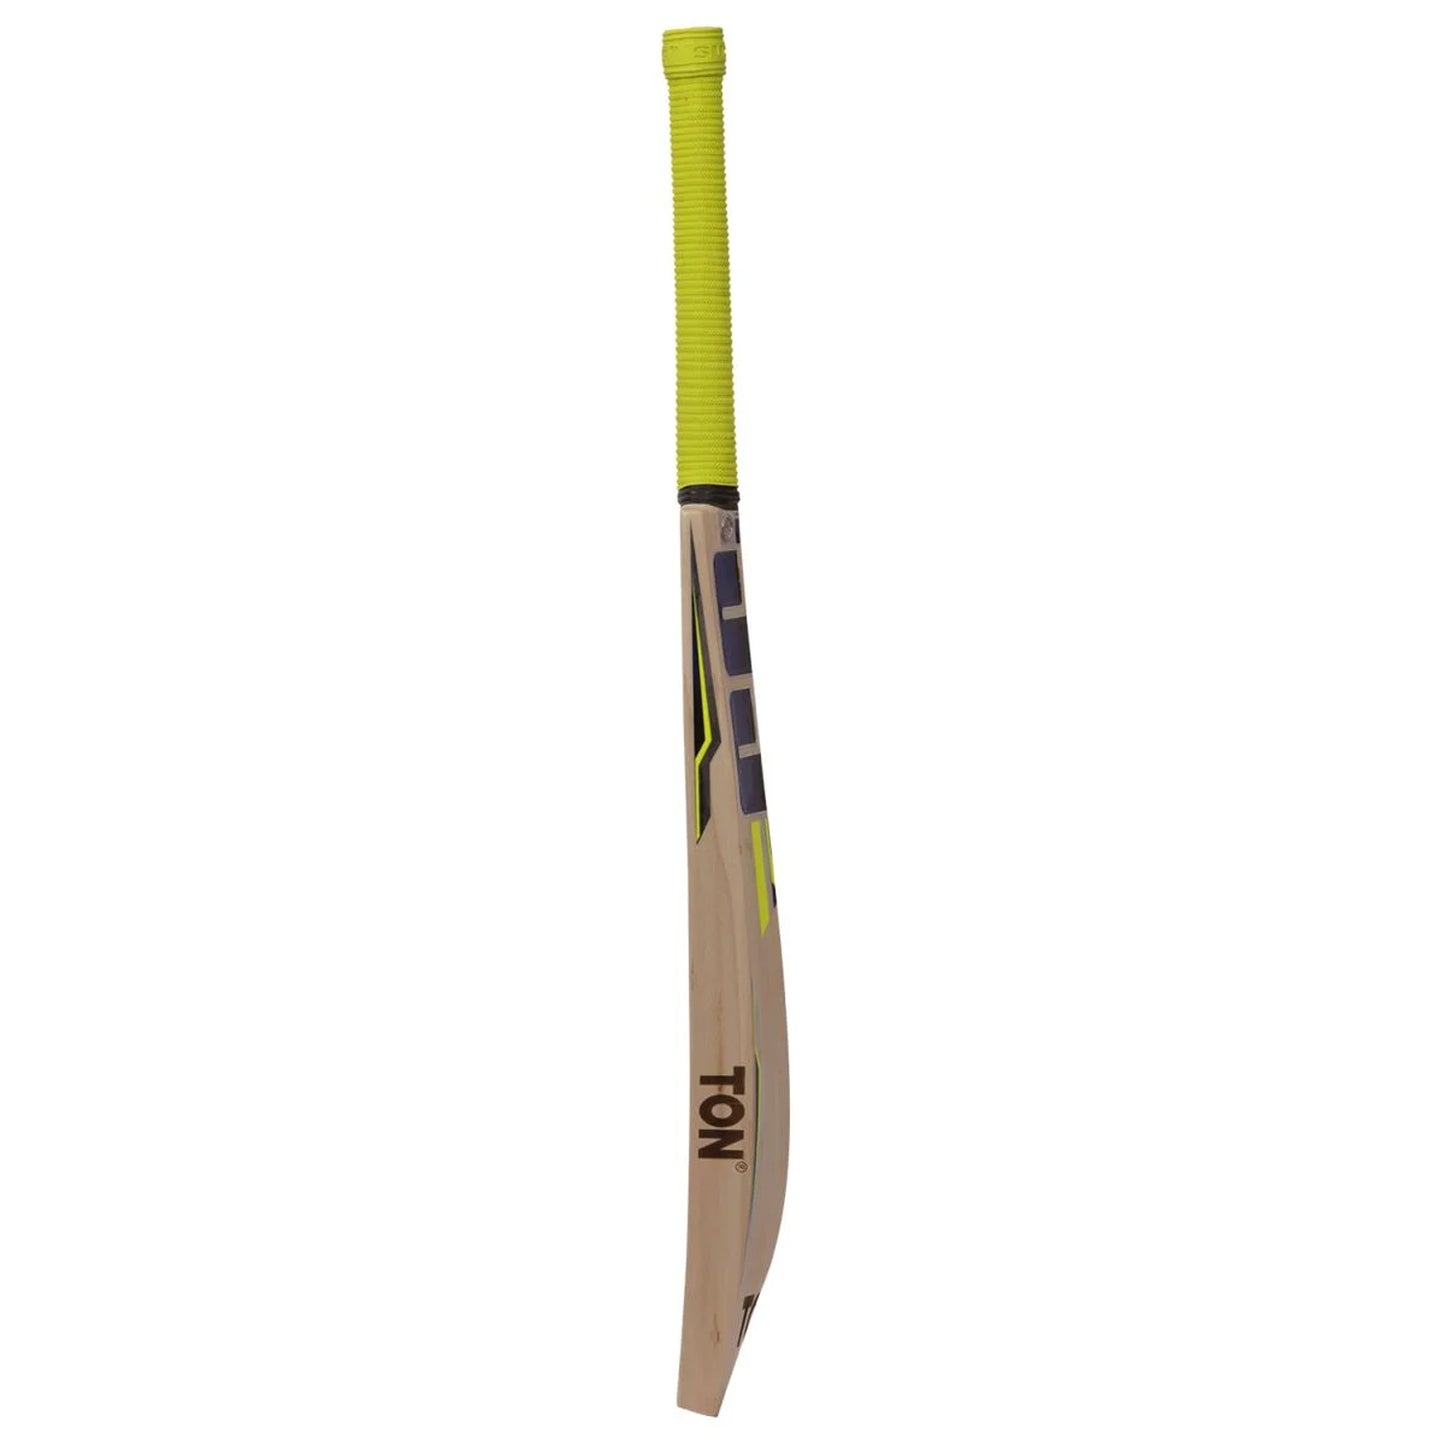 SS Waves English Willow Cricket Bat - Best Price online Prokicksports.com